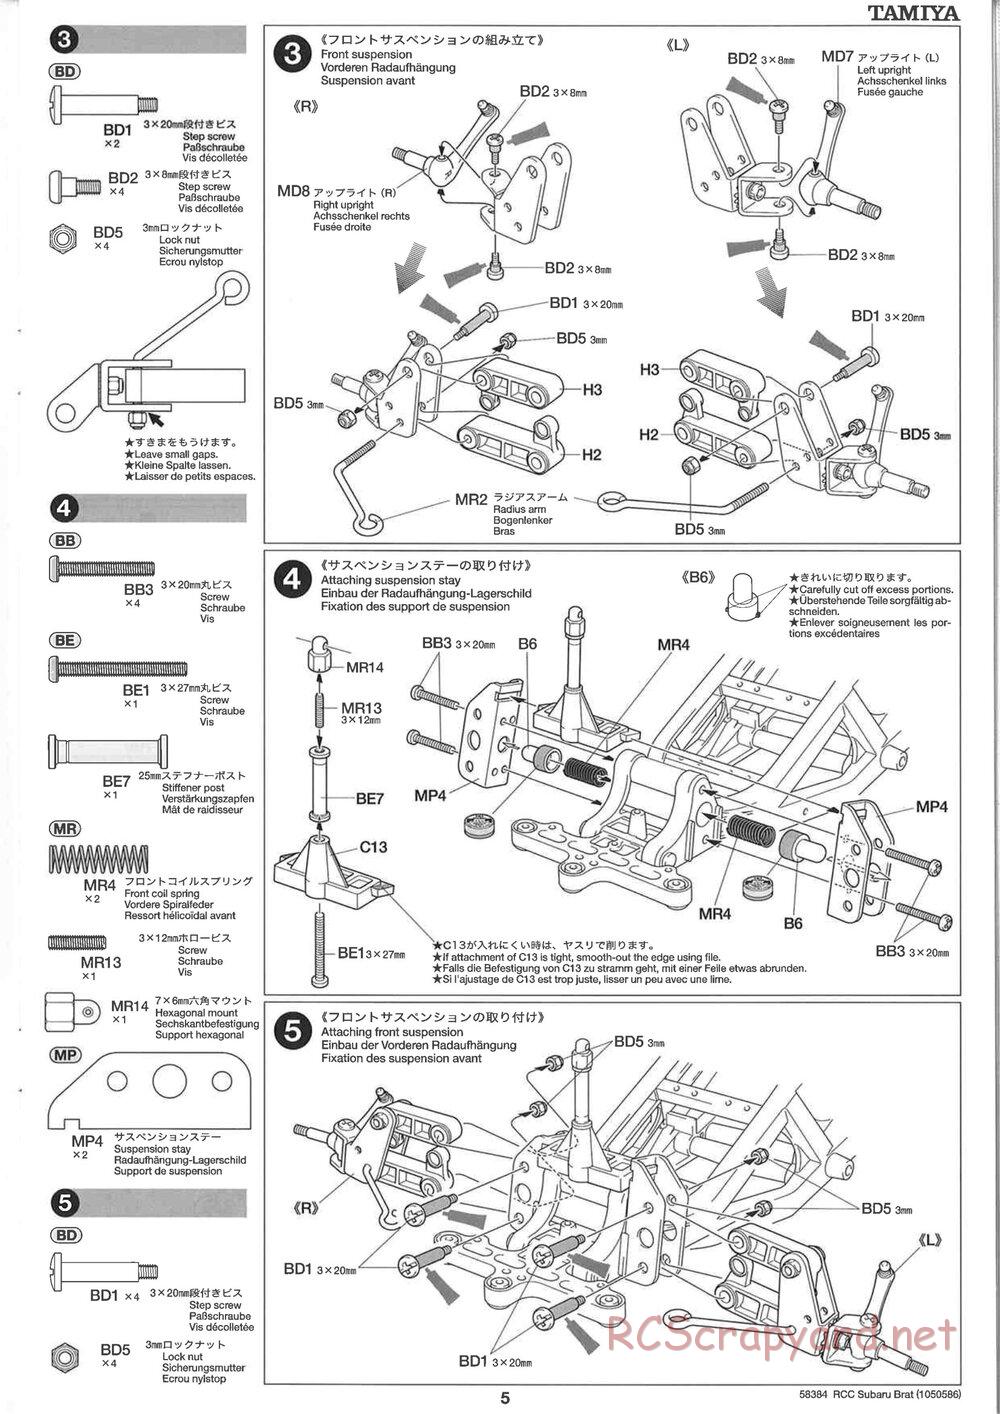 Tamiya - Subaru Brat 2007 - ORV Chassis - Manual - Page 5